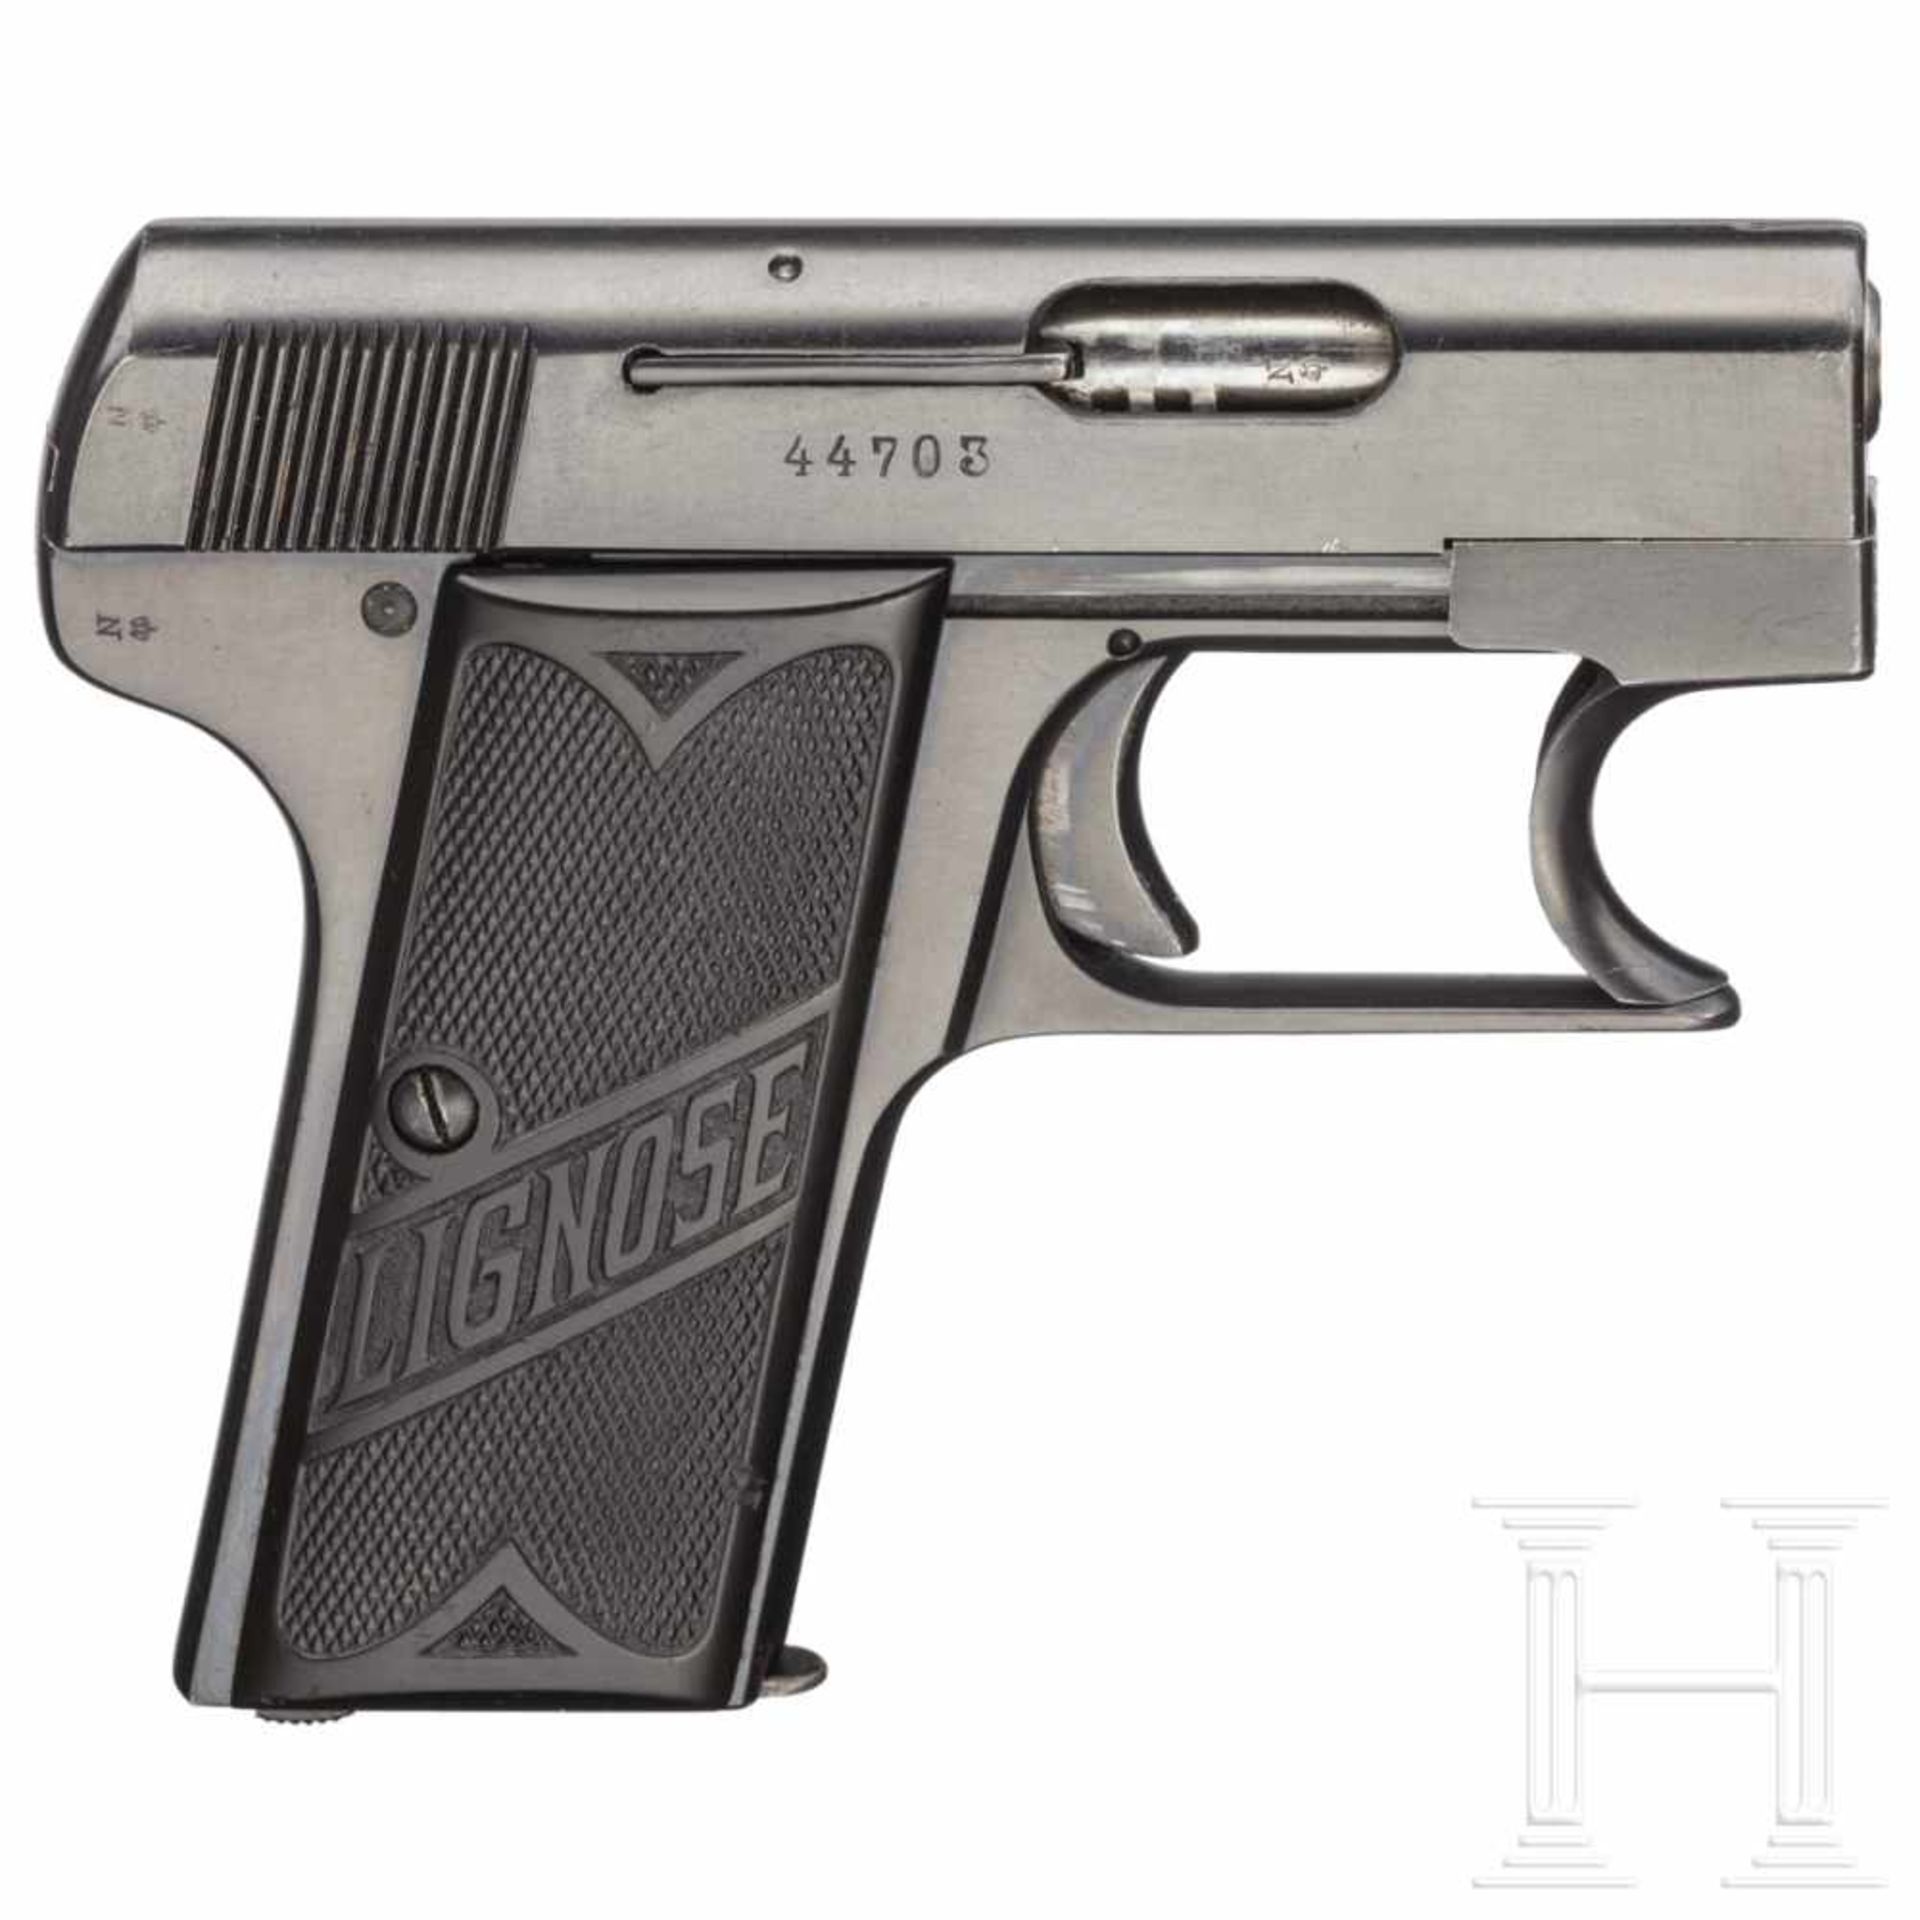 A Lignose M 3 A single-handed pistolKal. 6,35 mm Brown., Nr. 44703, nummerngleich. Blanker Lauf. - Bild 2 aus 2